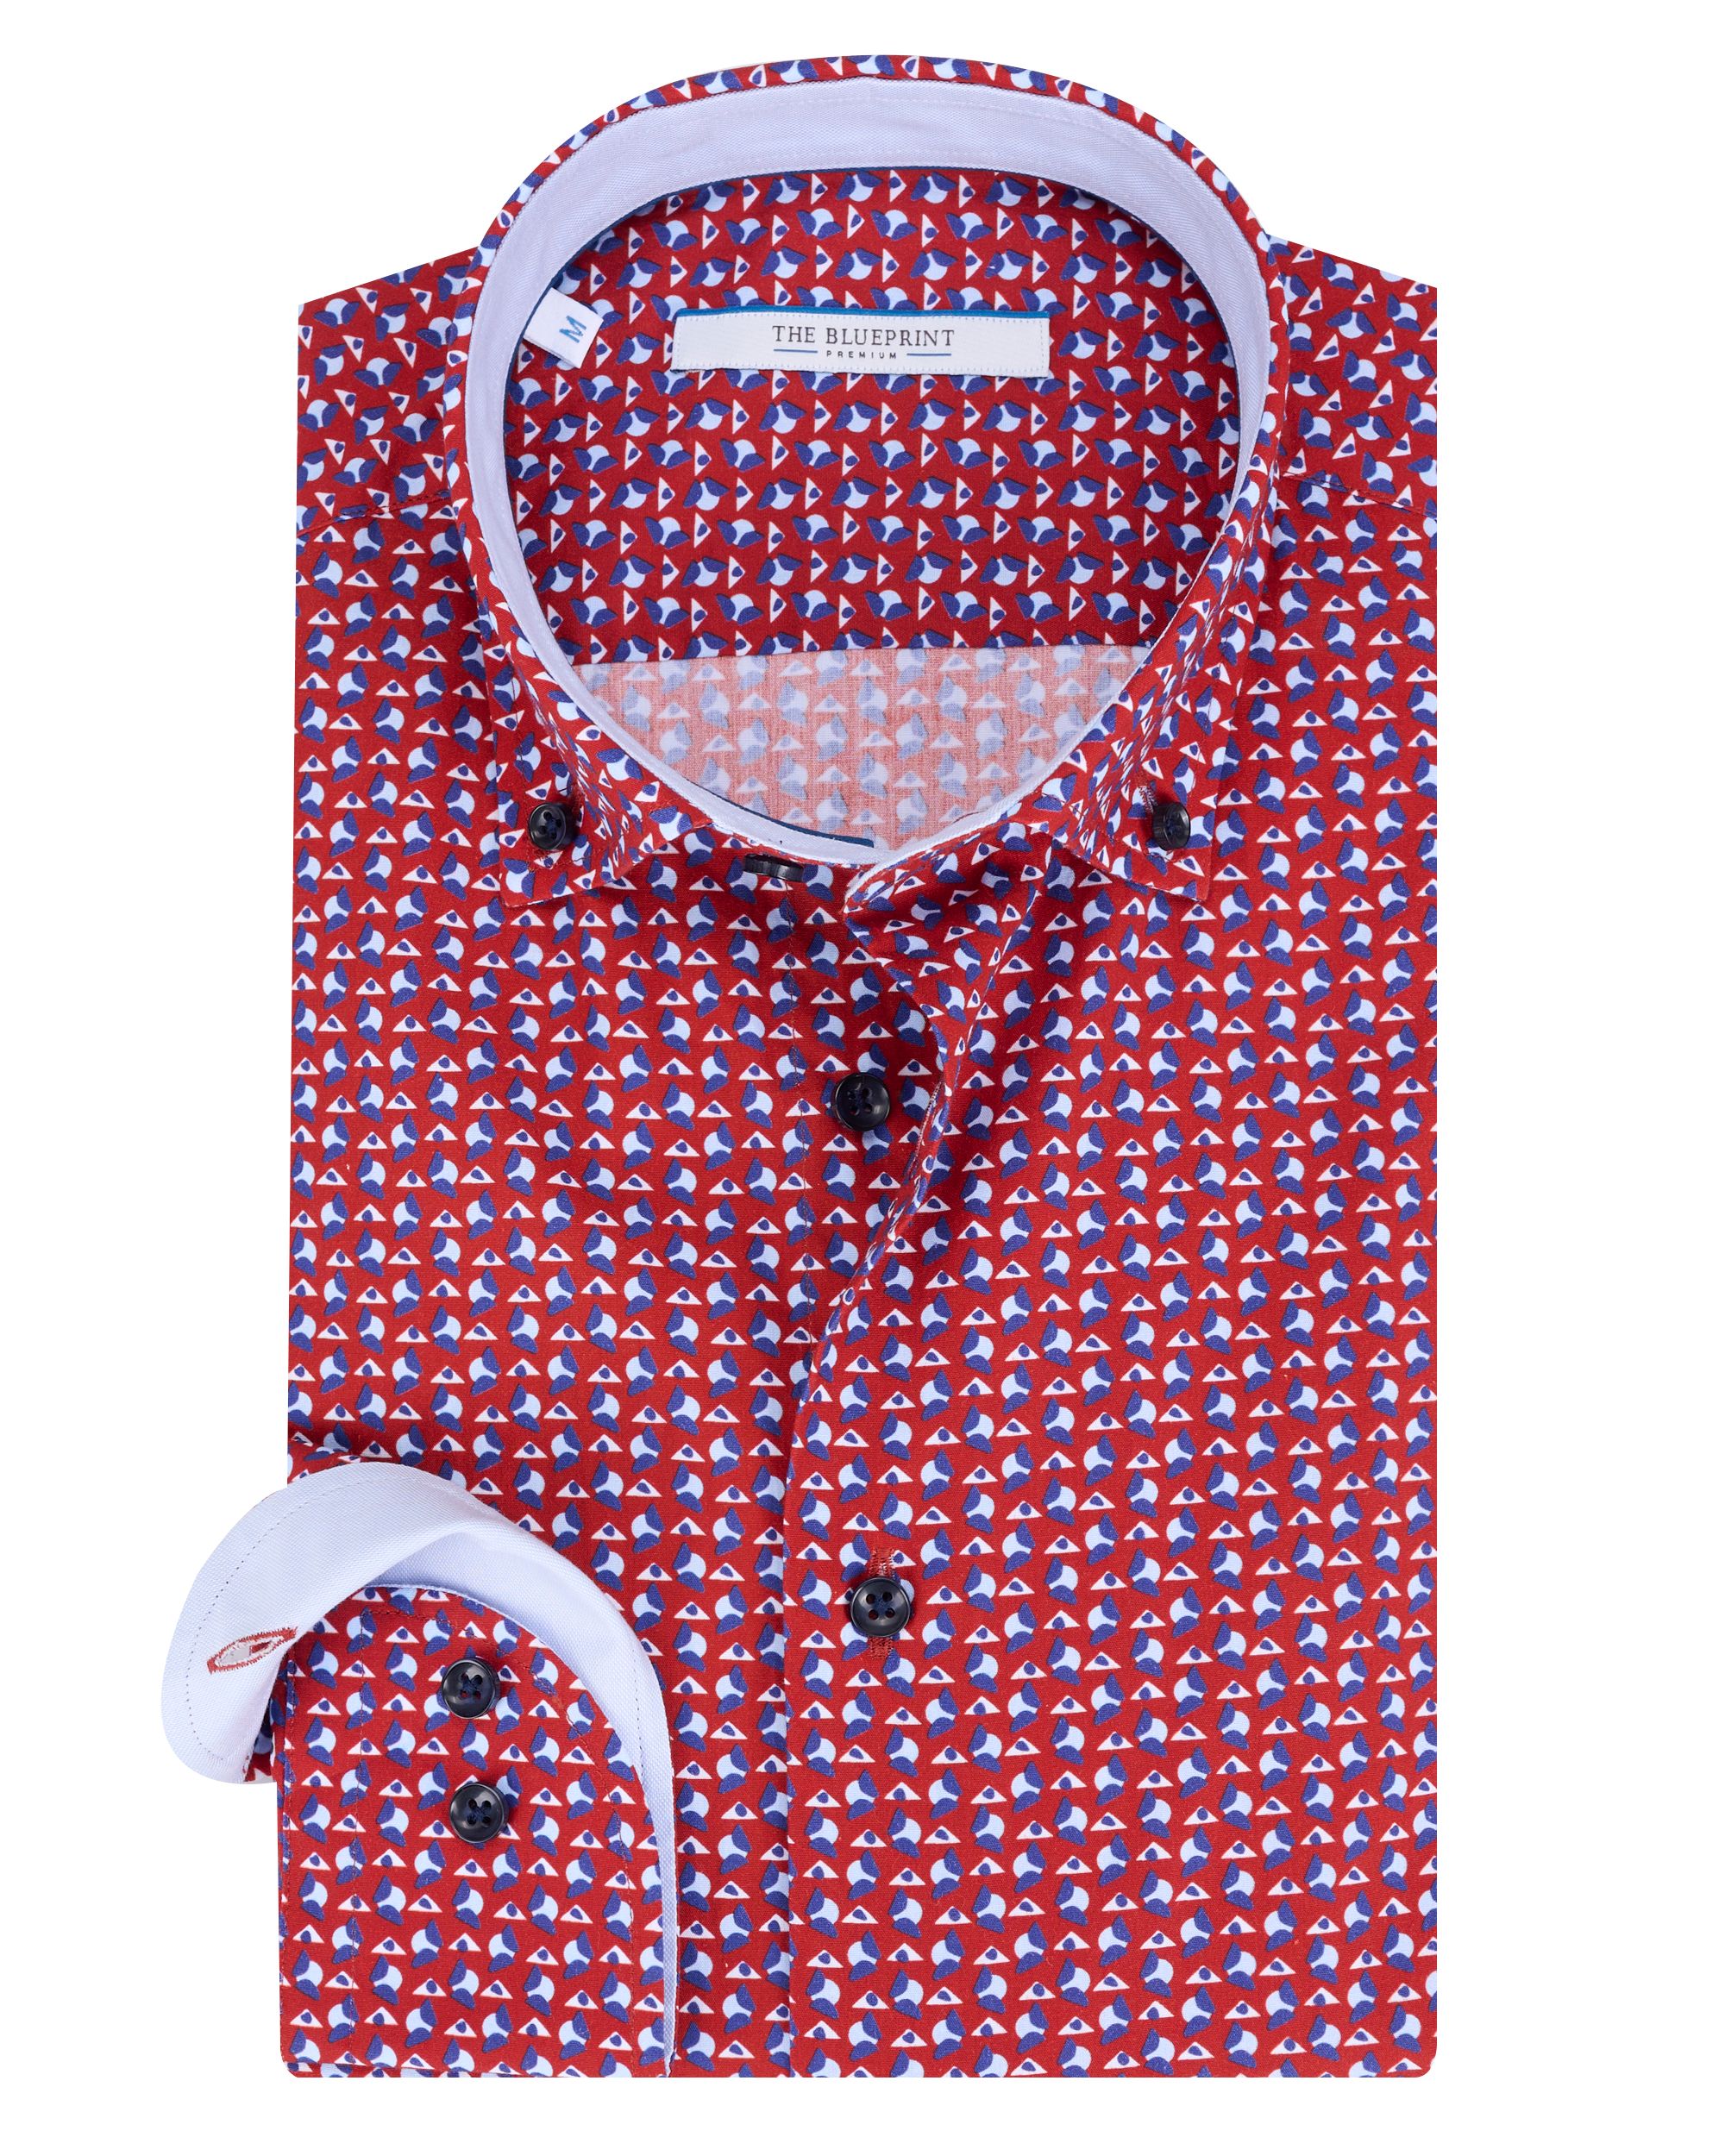 The BLUEPRINT Premium - Trendy overhemd LM Rood dessin 086647-001-L